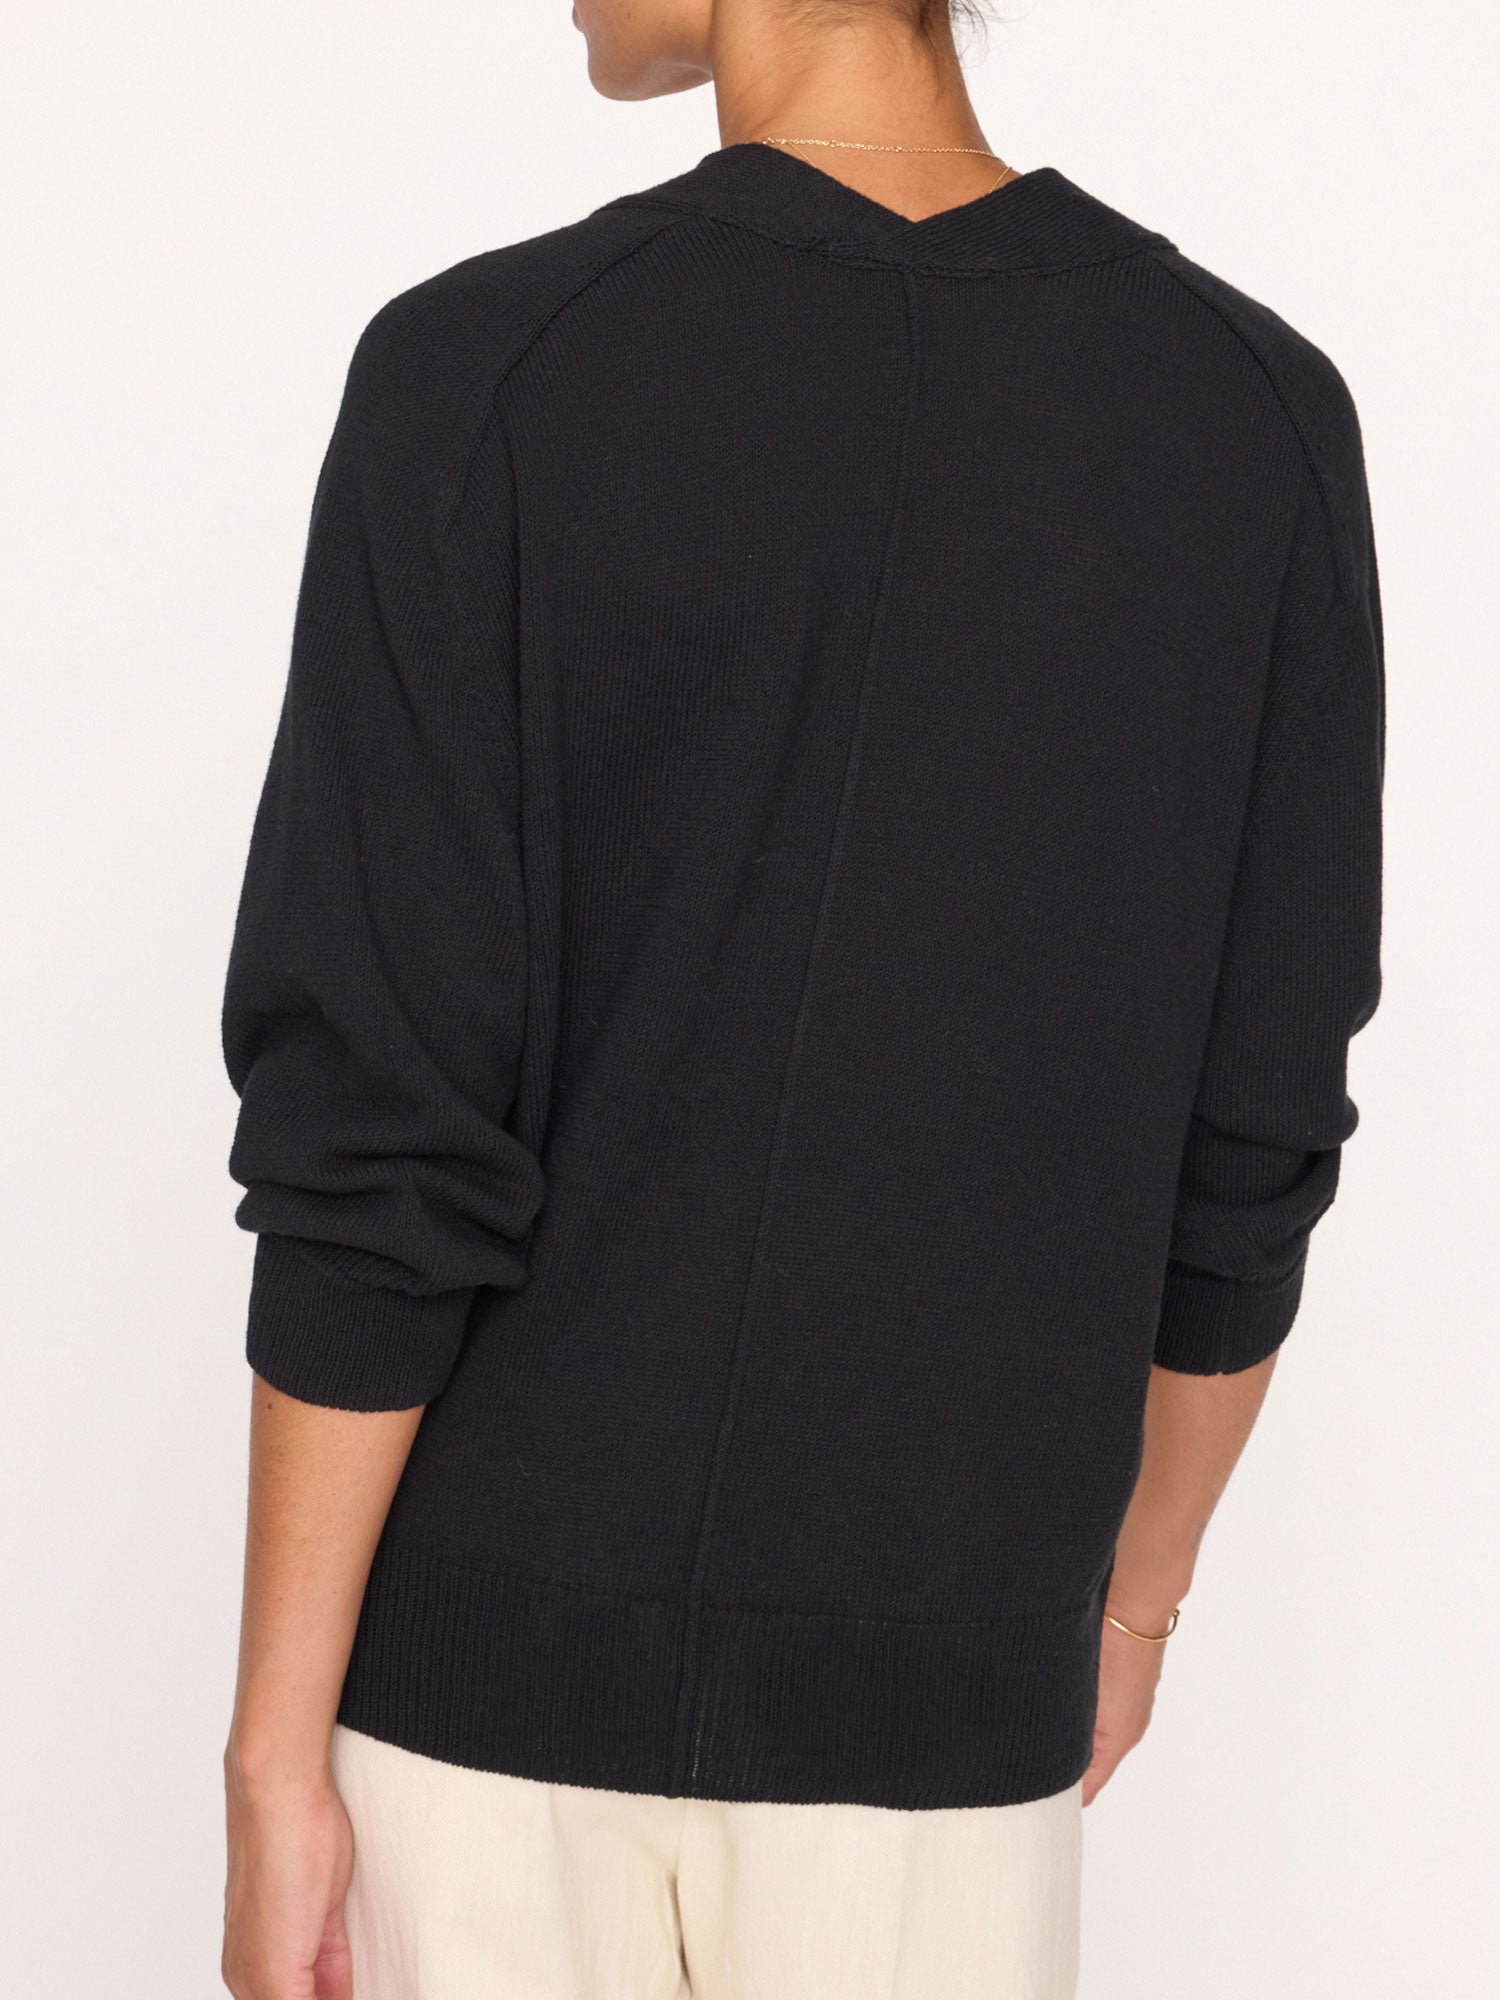 Imogen V-neck cotton black sweater back text